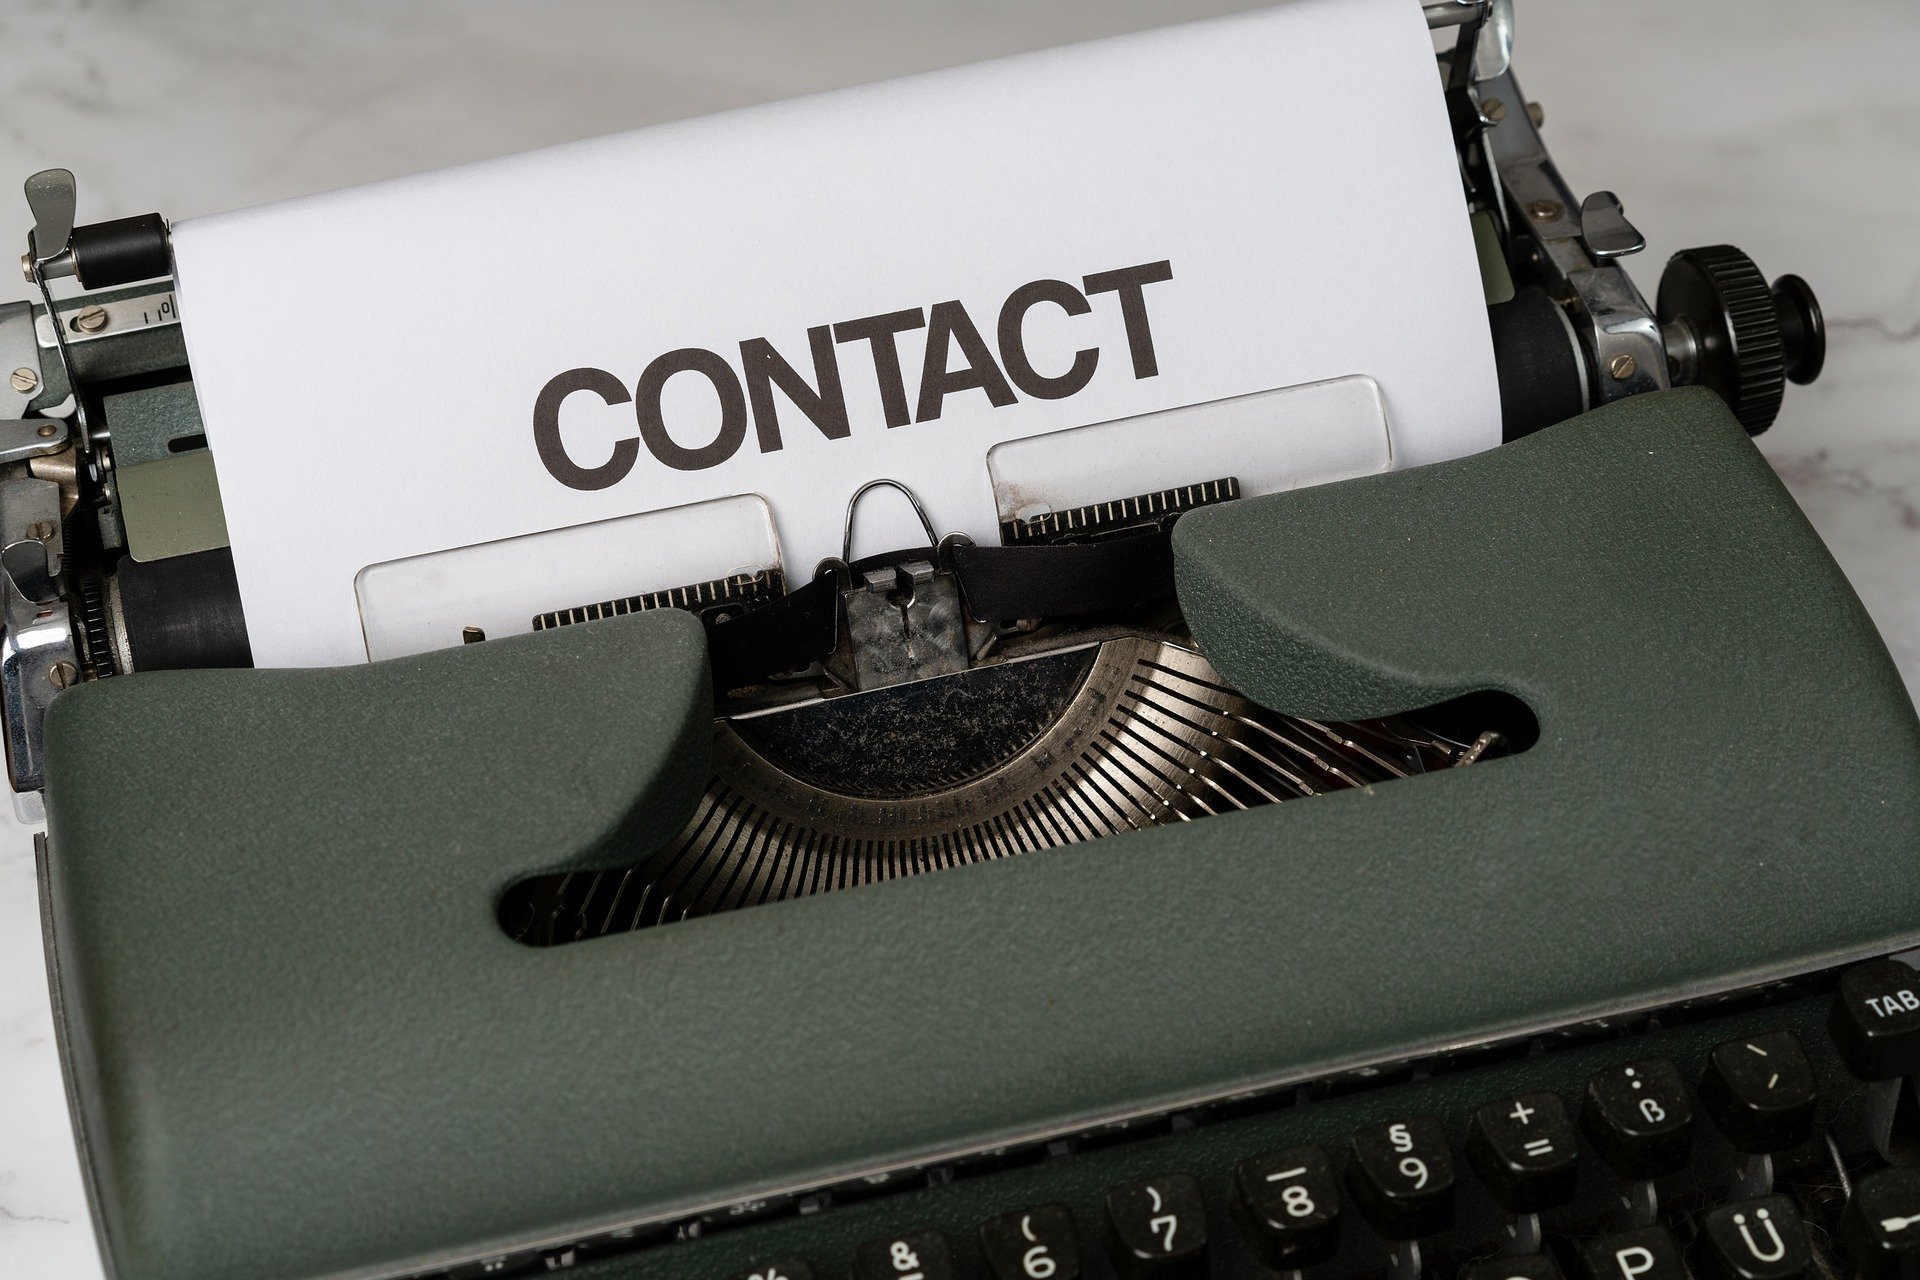 Typewriter showing contact link